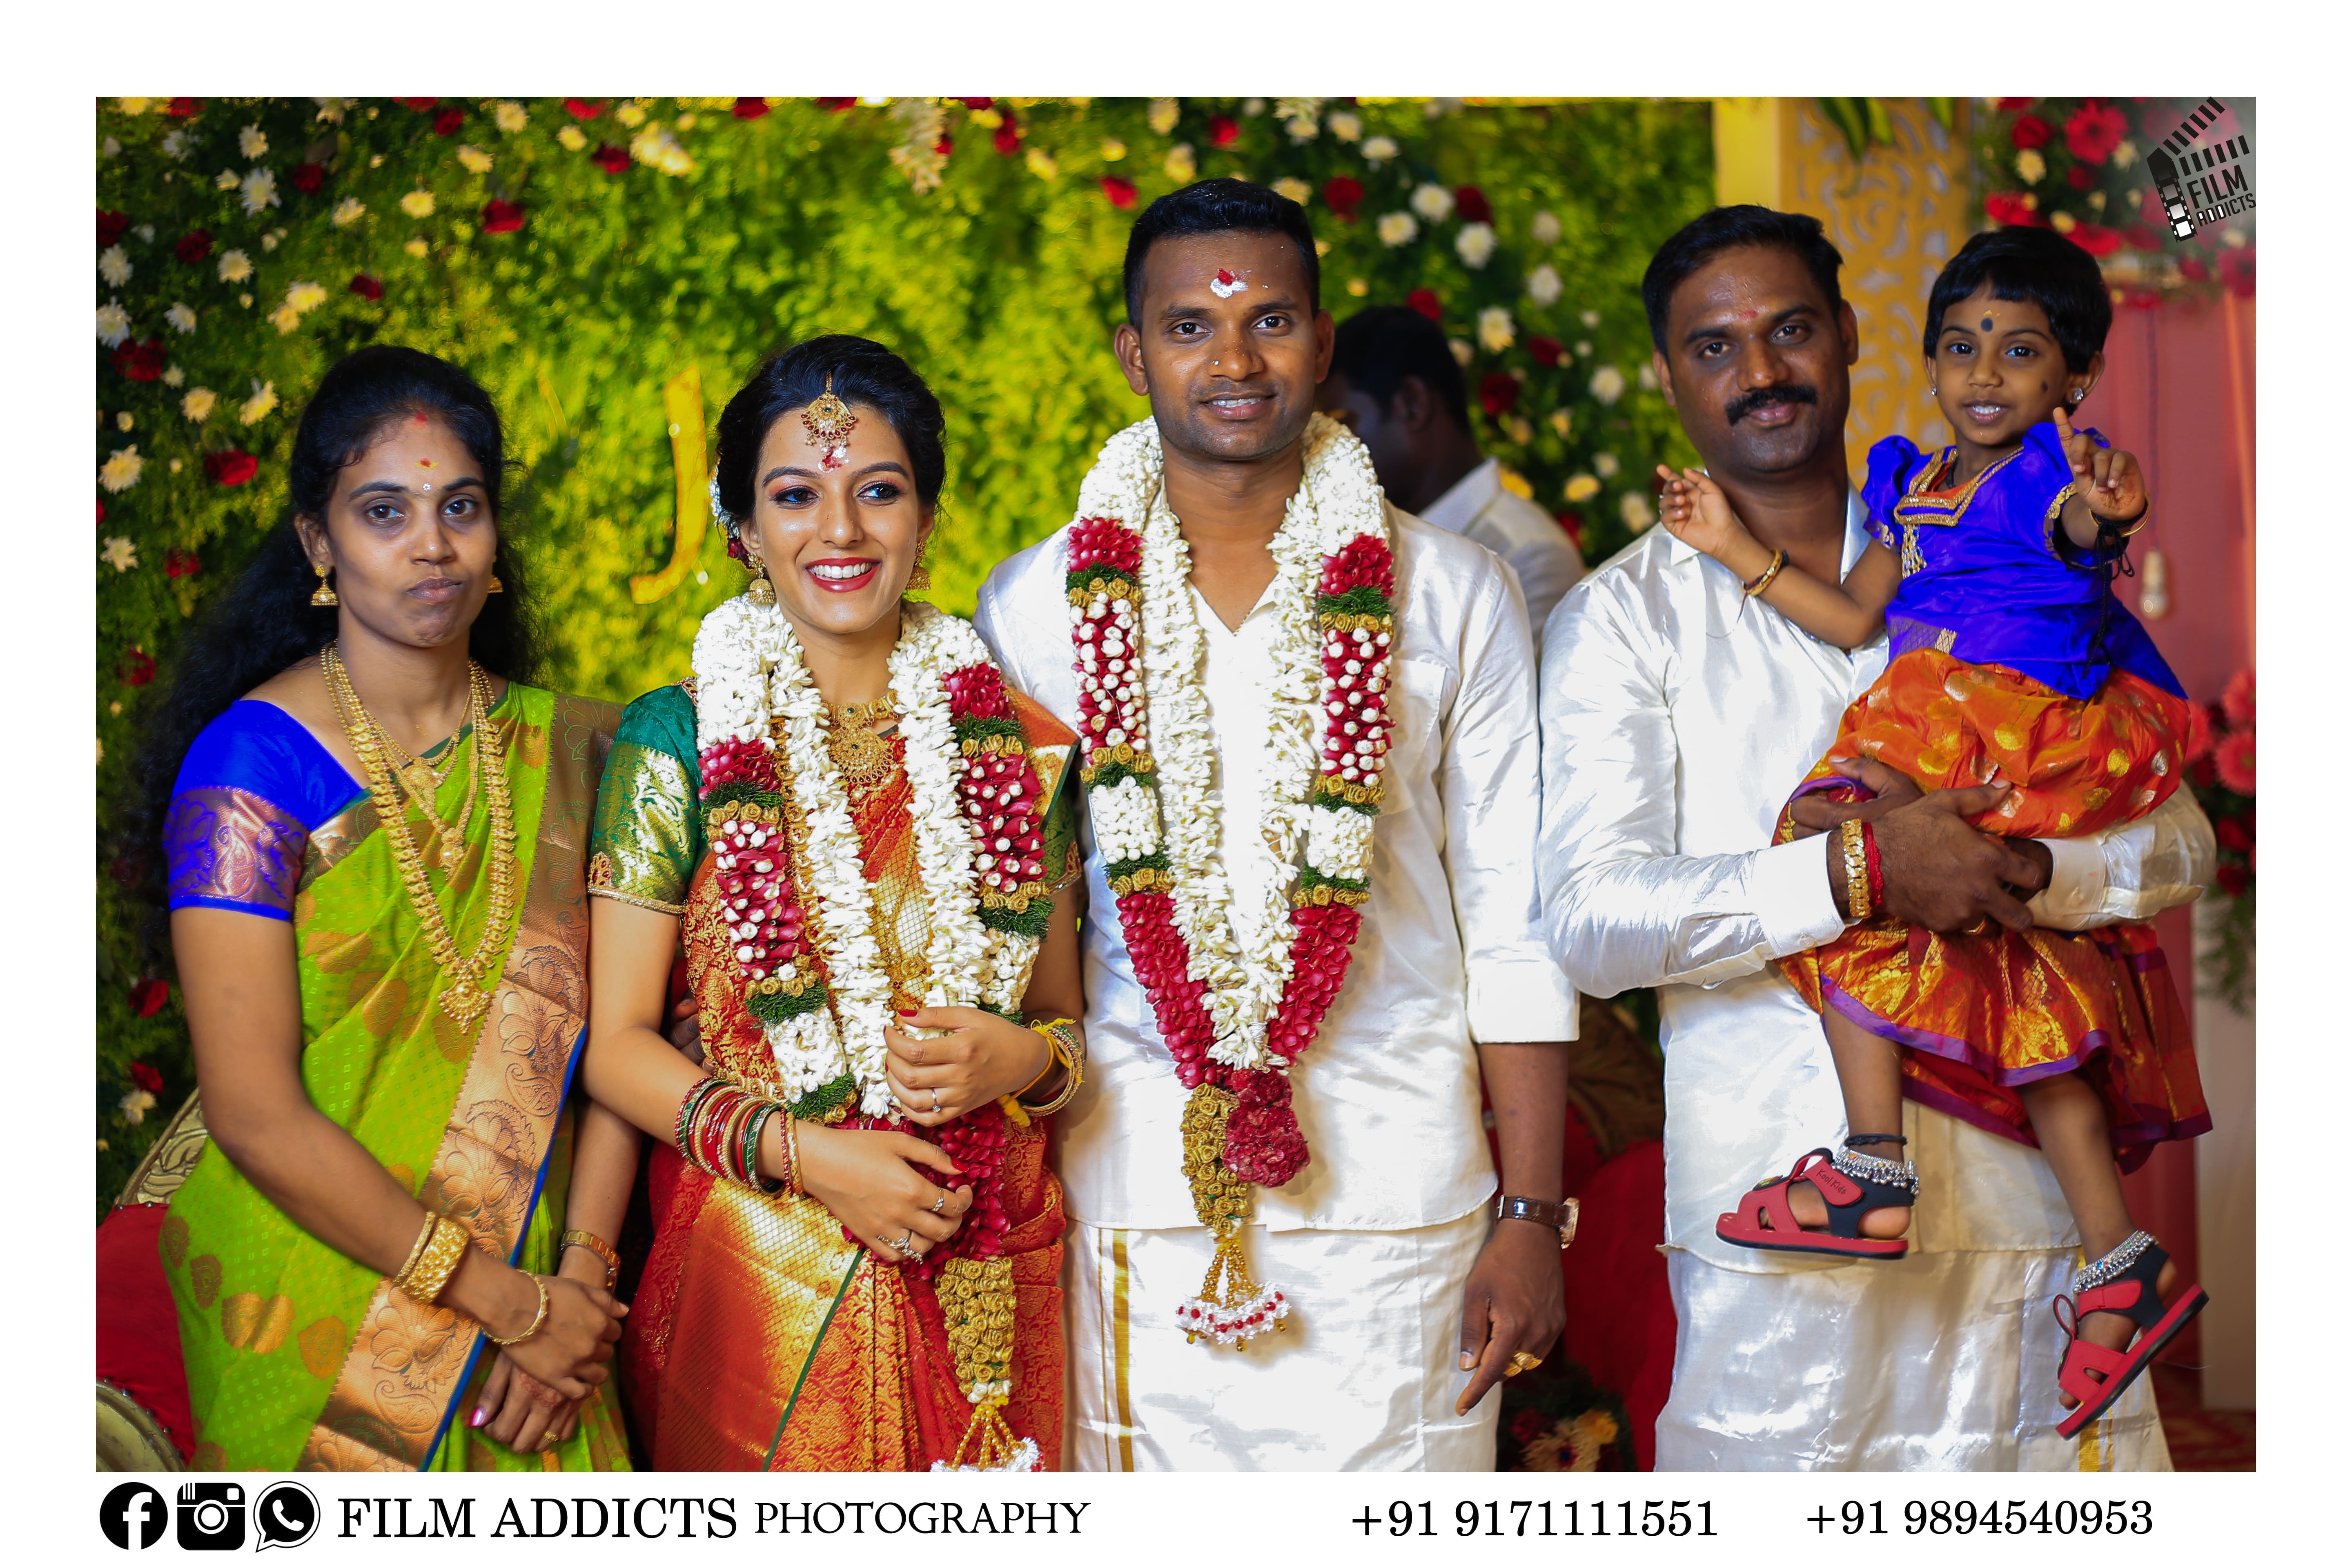 Virudhunagar Wedding Planners, Best Wedding Planners in Virudhunagar,Wedding Planners in Virudhunagar